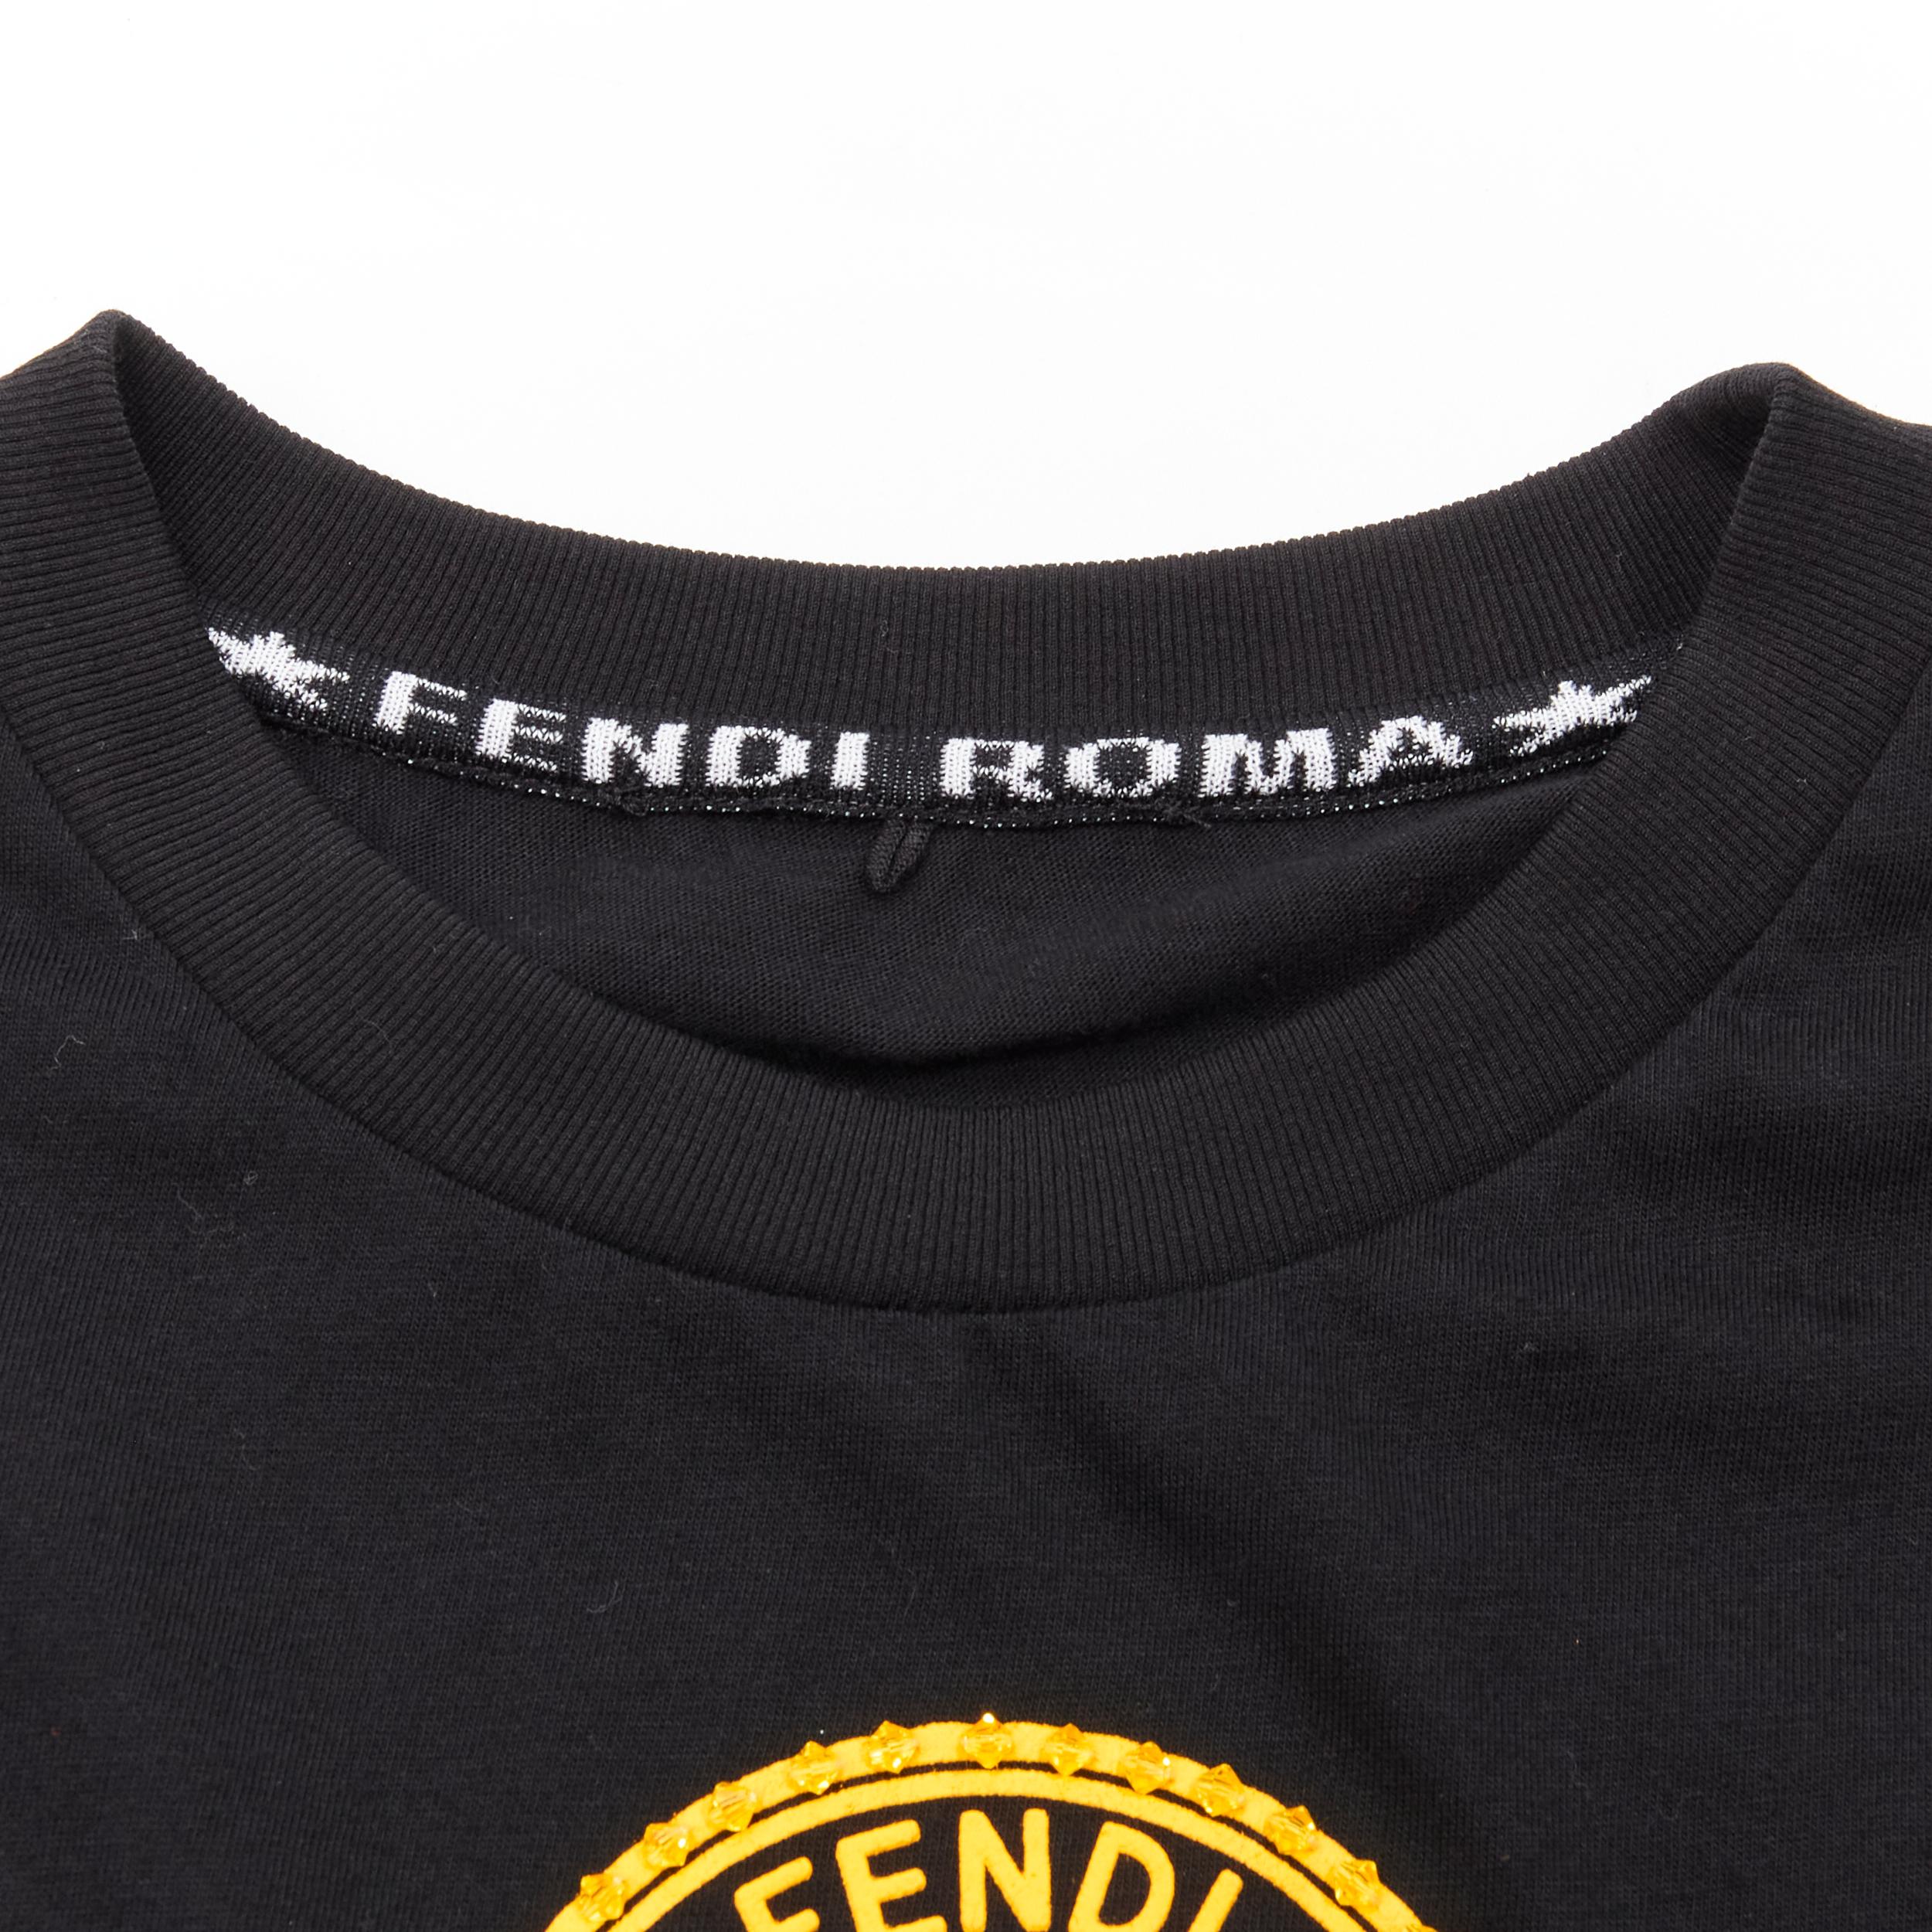 FENDI ROMA FF bead embellished logo black yellow cotton tshirt S 1